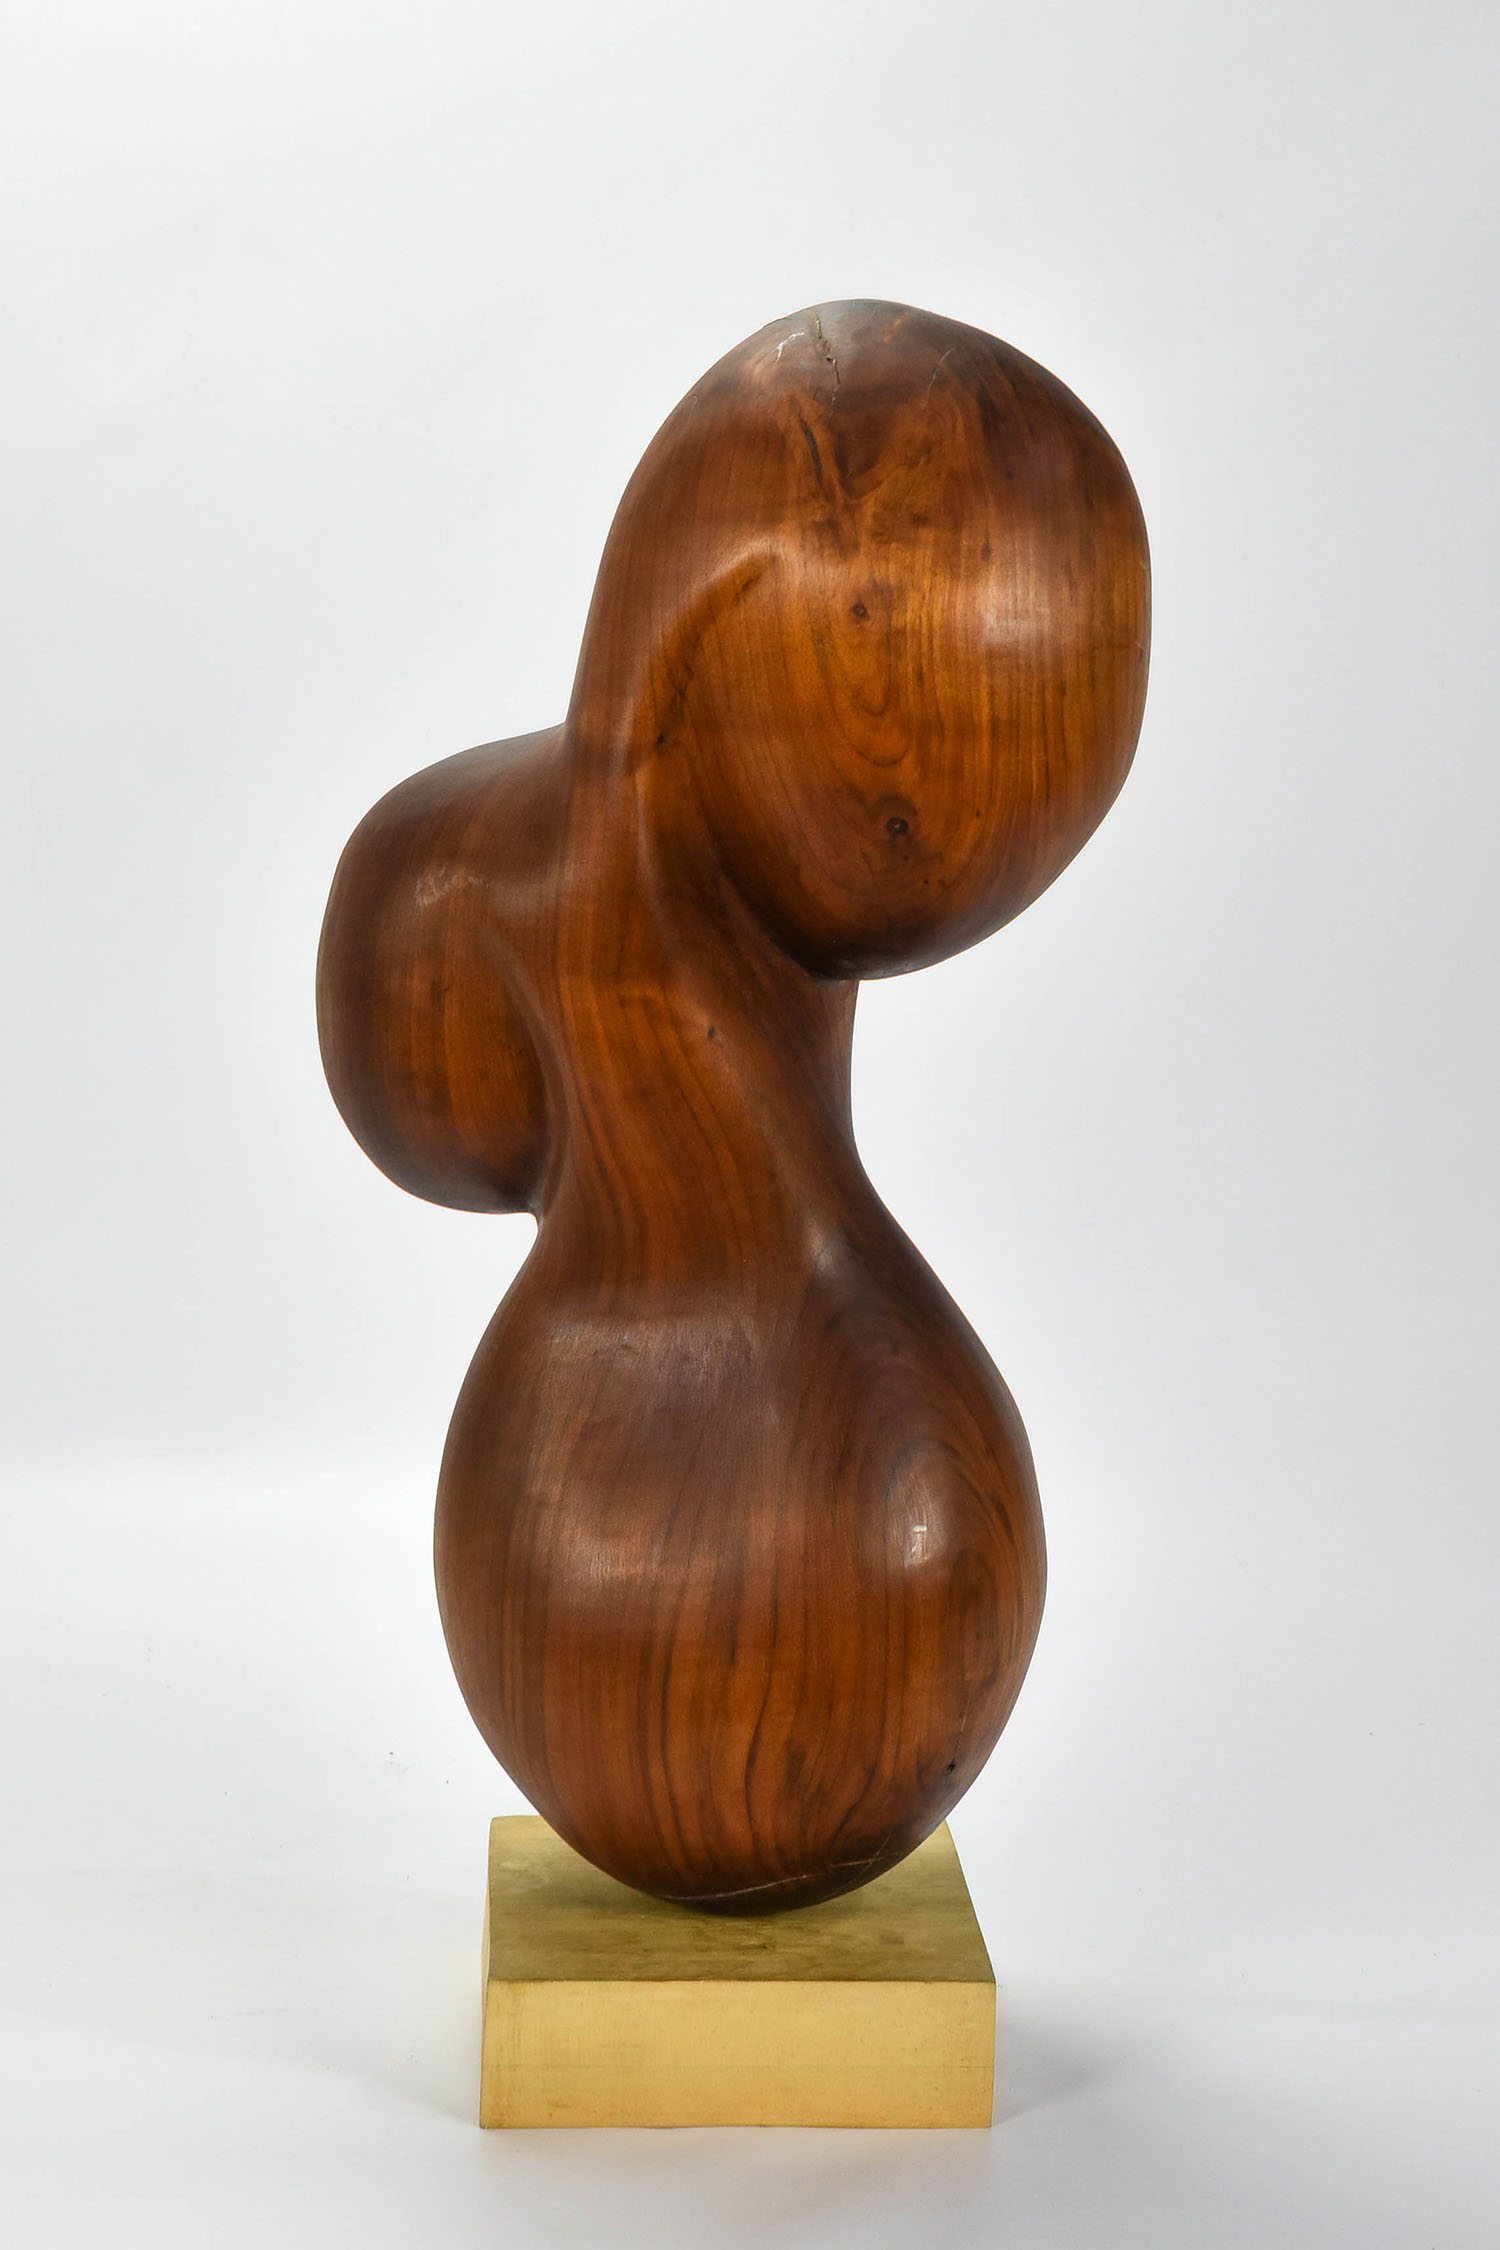 MCM Brancusi Style Carved Wood Biomorphic Sculpture